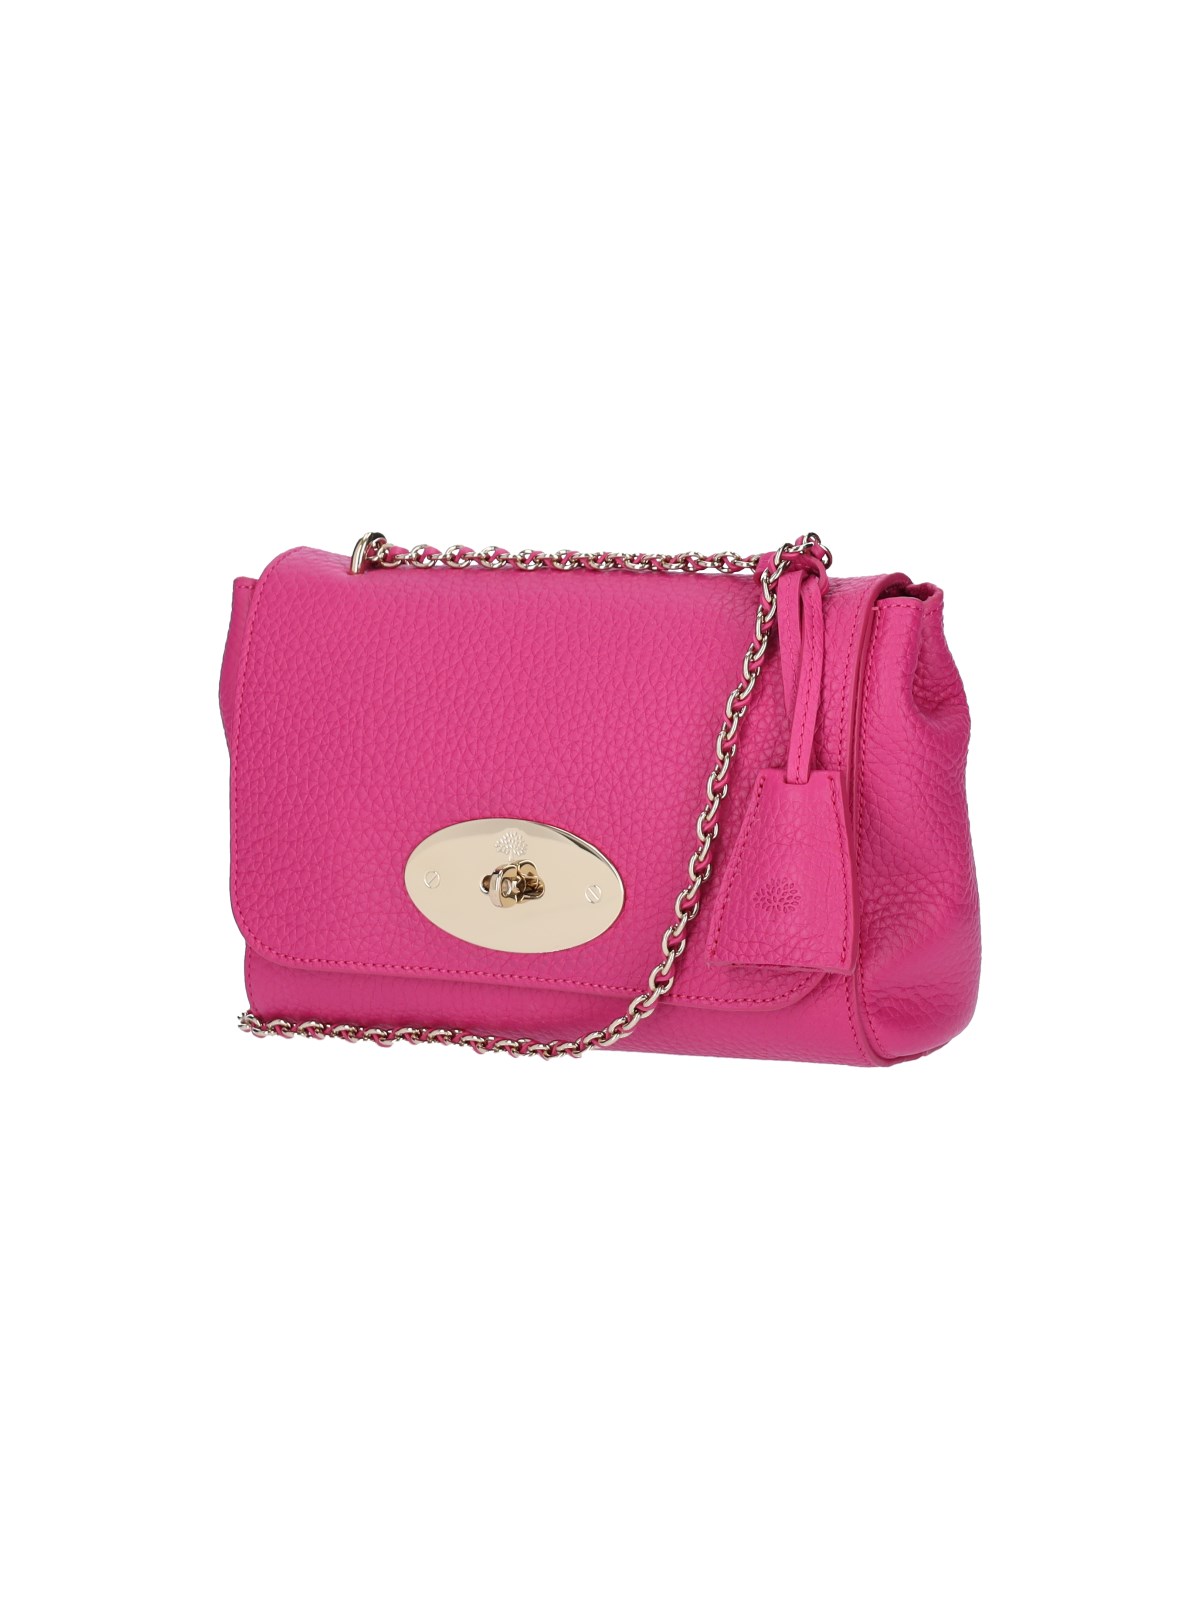 MULBERRY: handbag for women - Fuchsia | Mulberry handbag RL6595736 online  at GIGLIO.COM